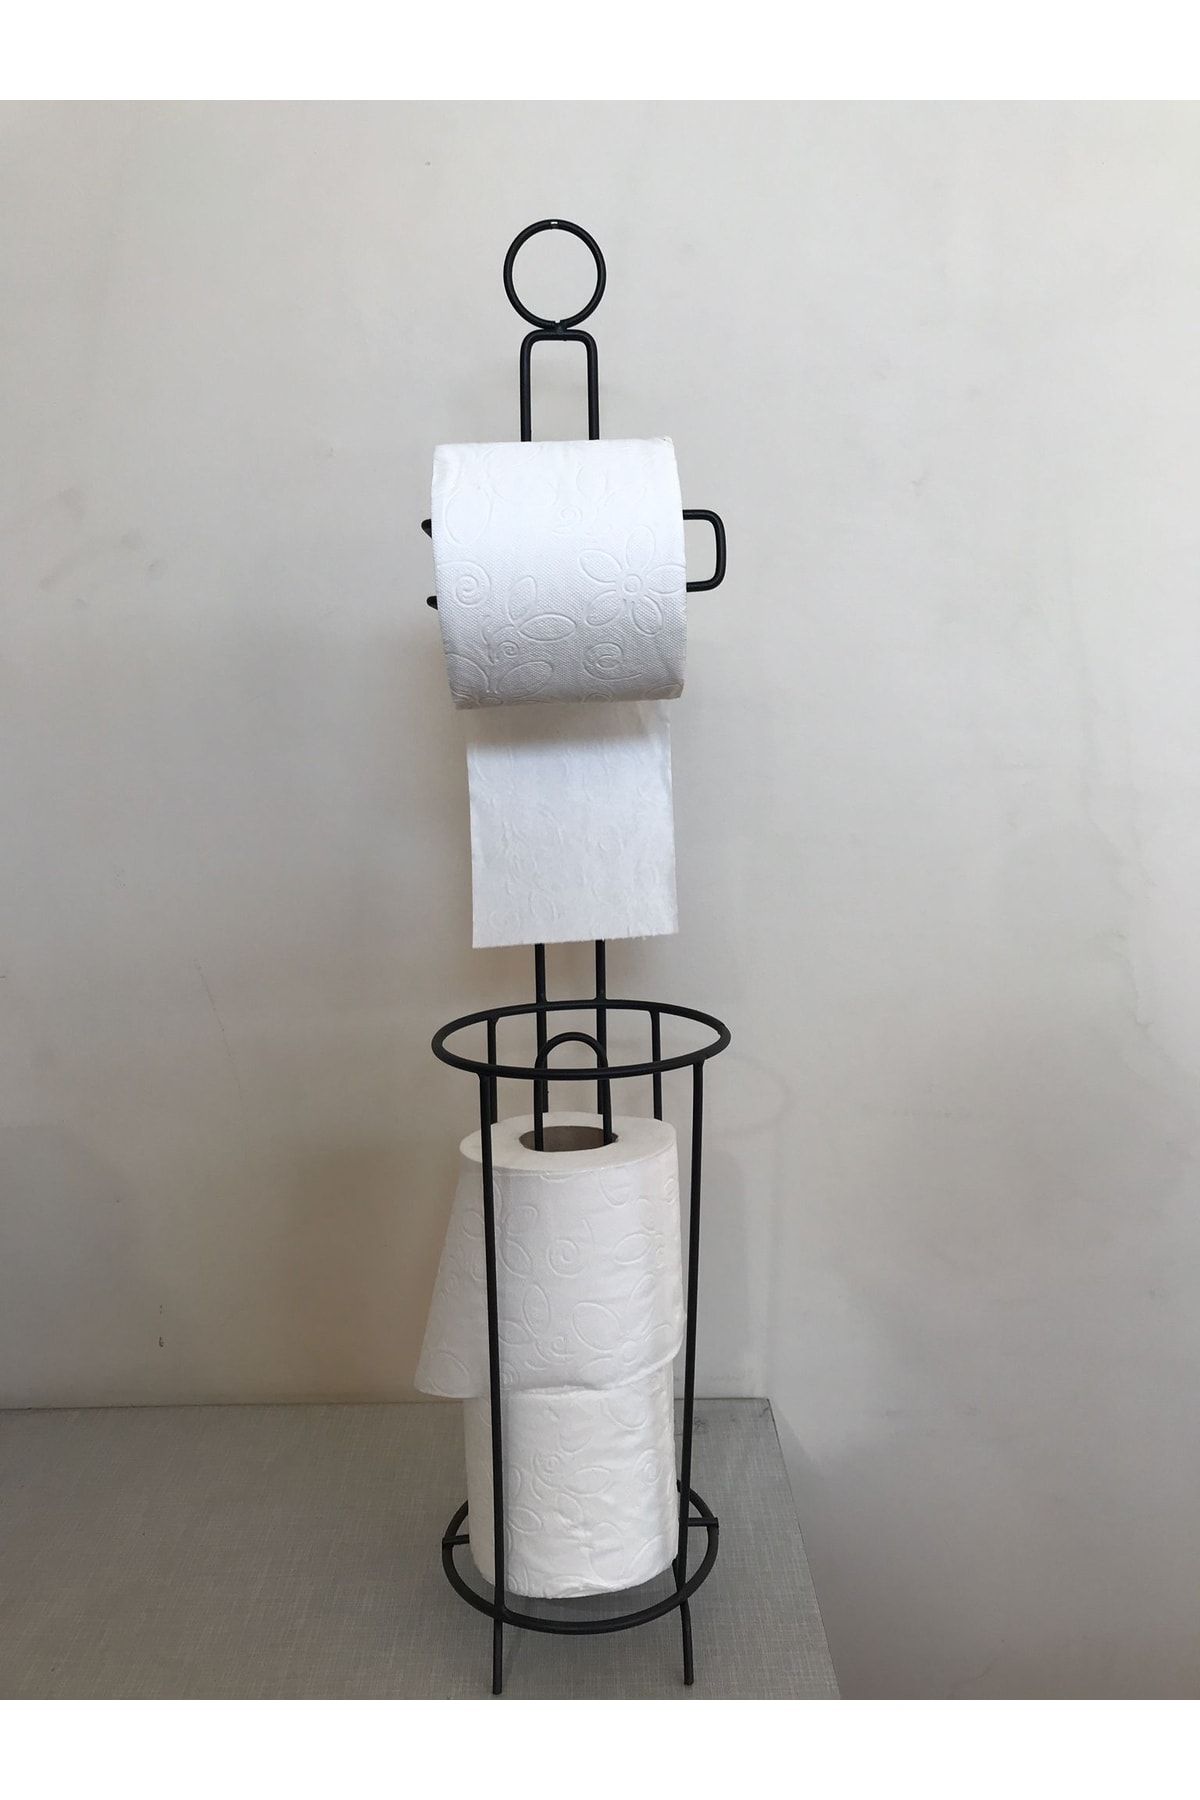 nevhas Tuvalet-banyo Kağıtlık Ayaklı Wc'lik , Peçetelik Banyo Aksesuarı